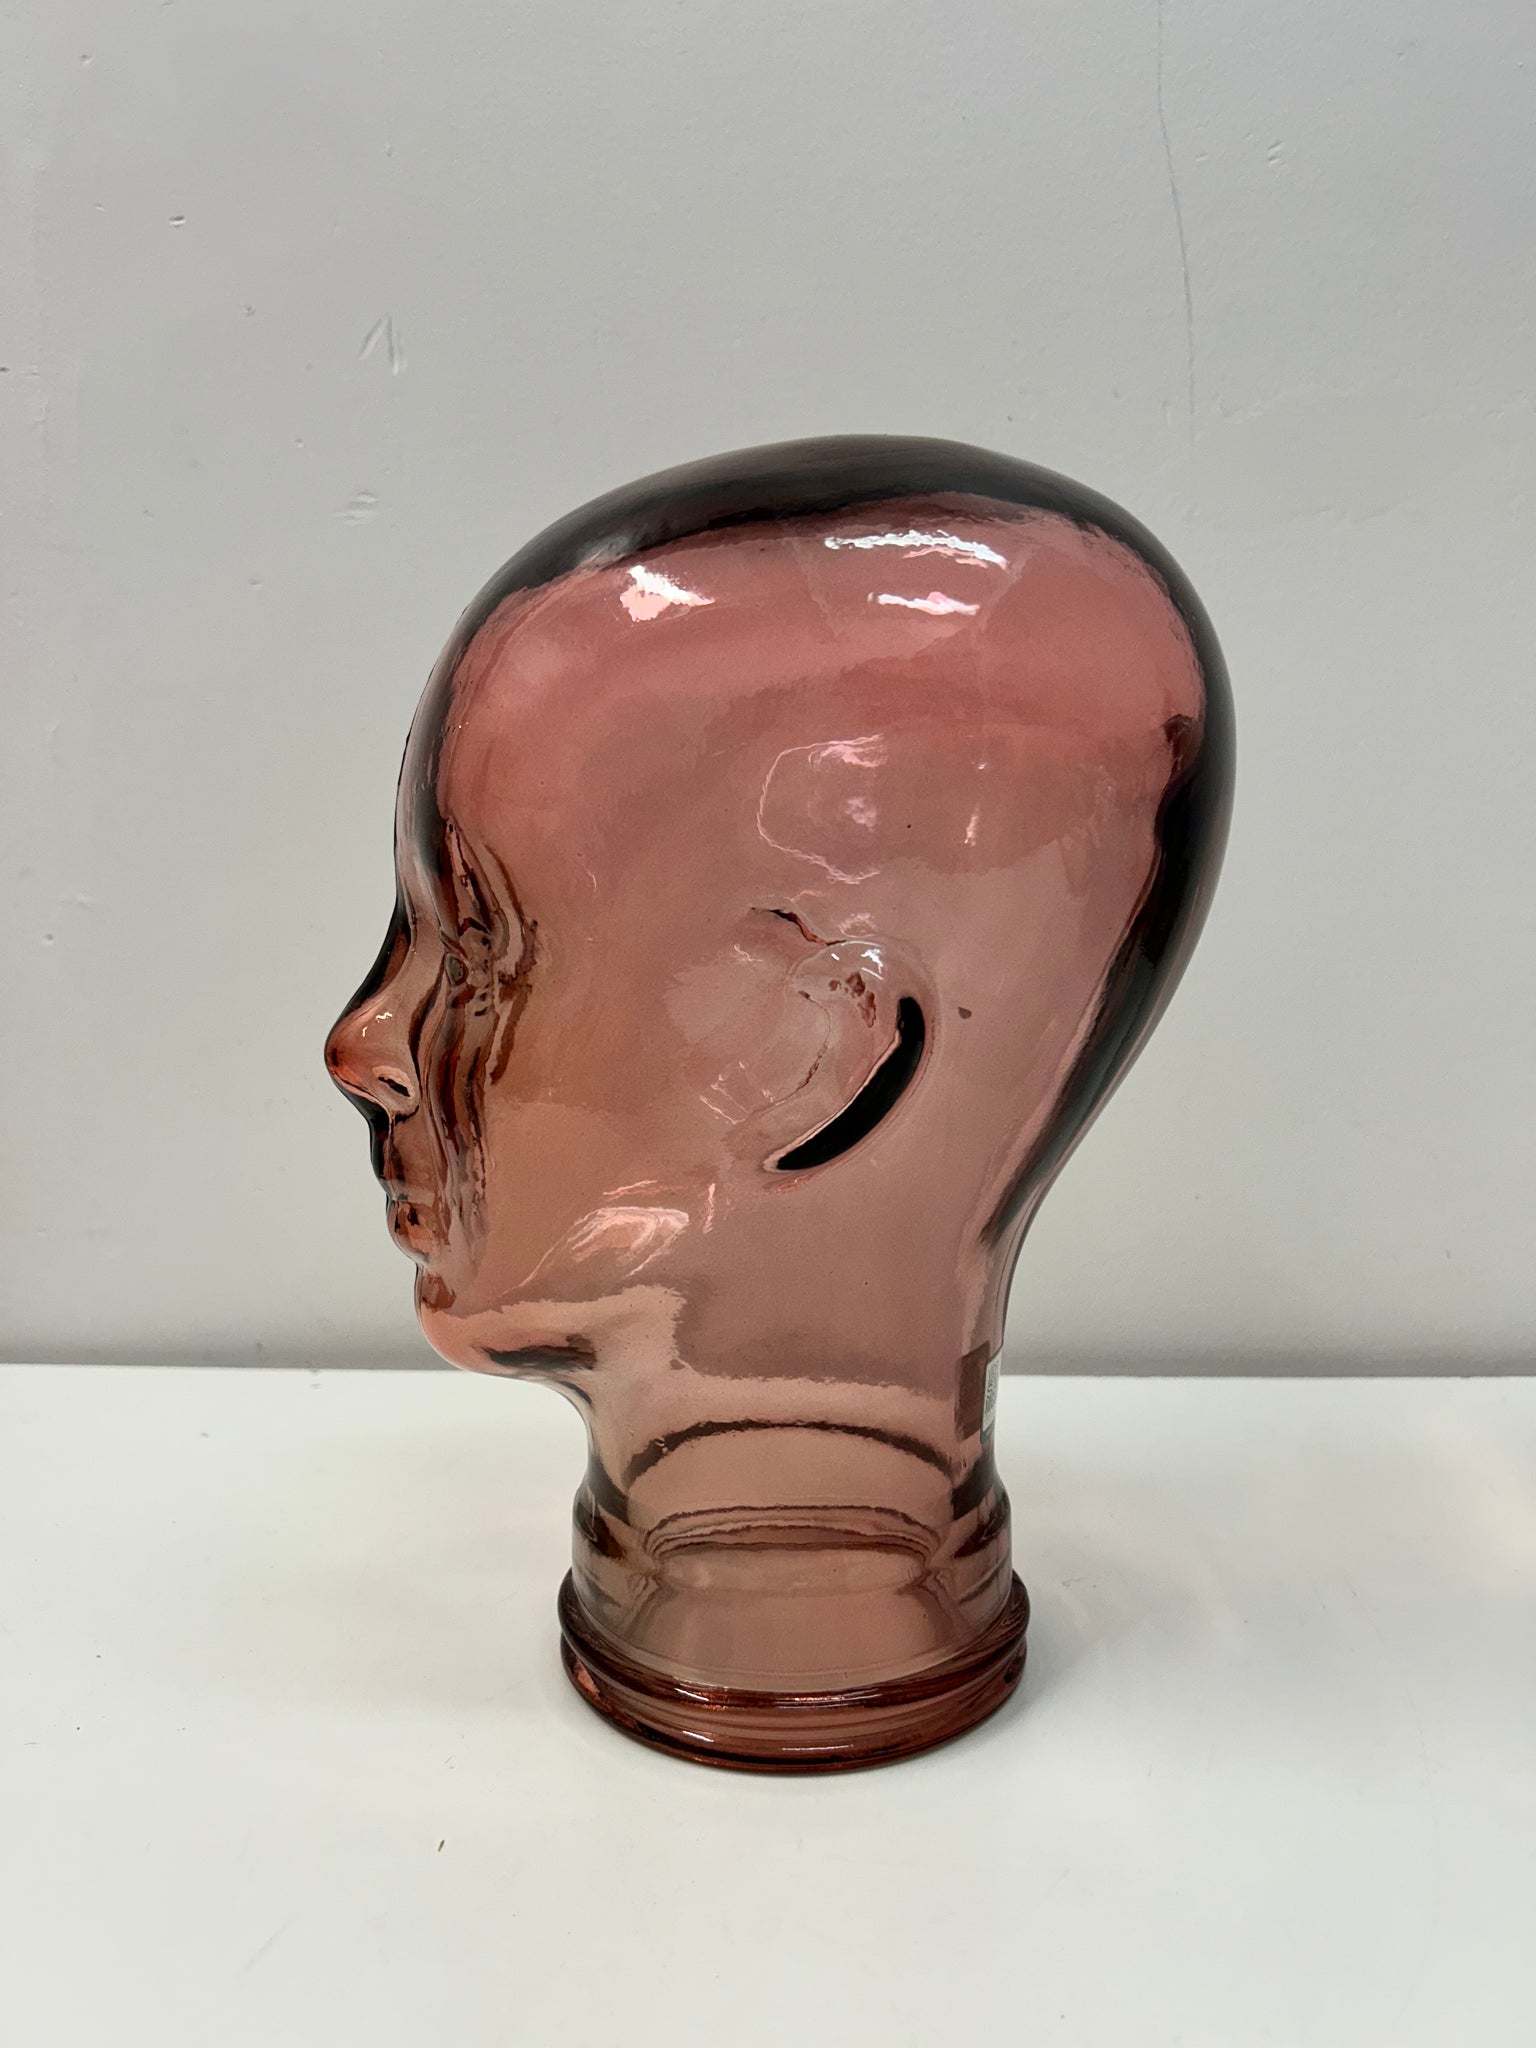 Purple-red glass mannequin head